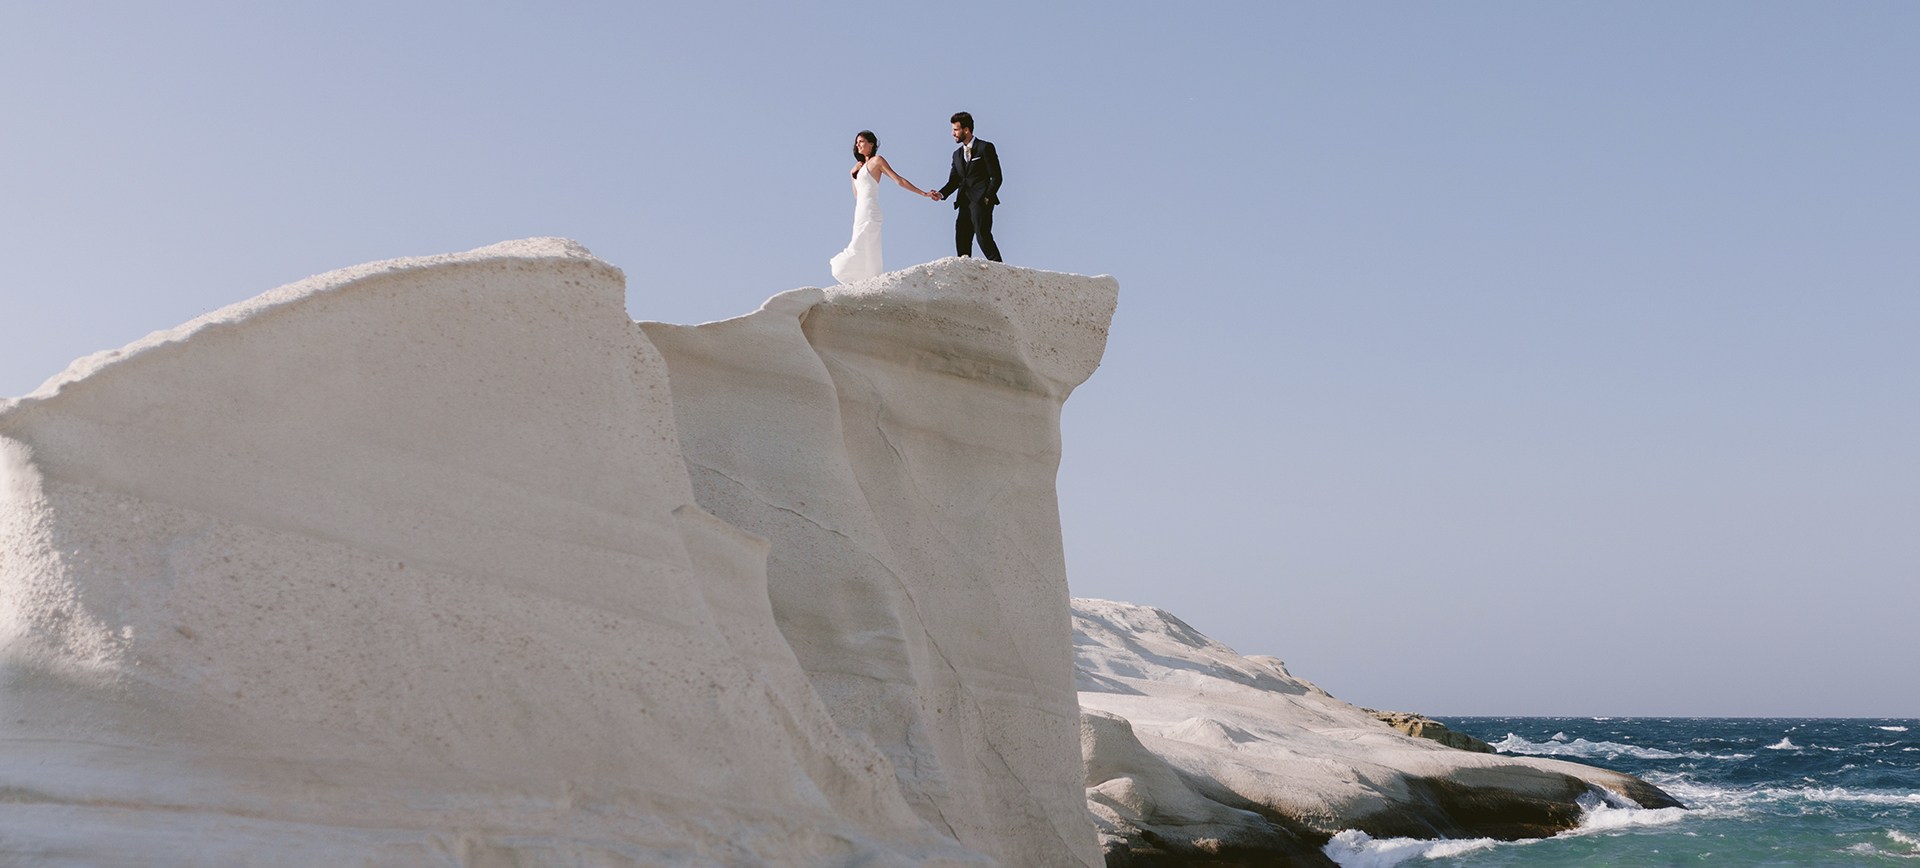 elopement wedding in greece - milos island wedding